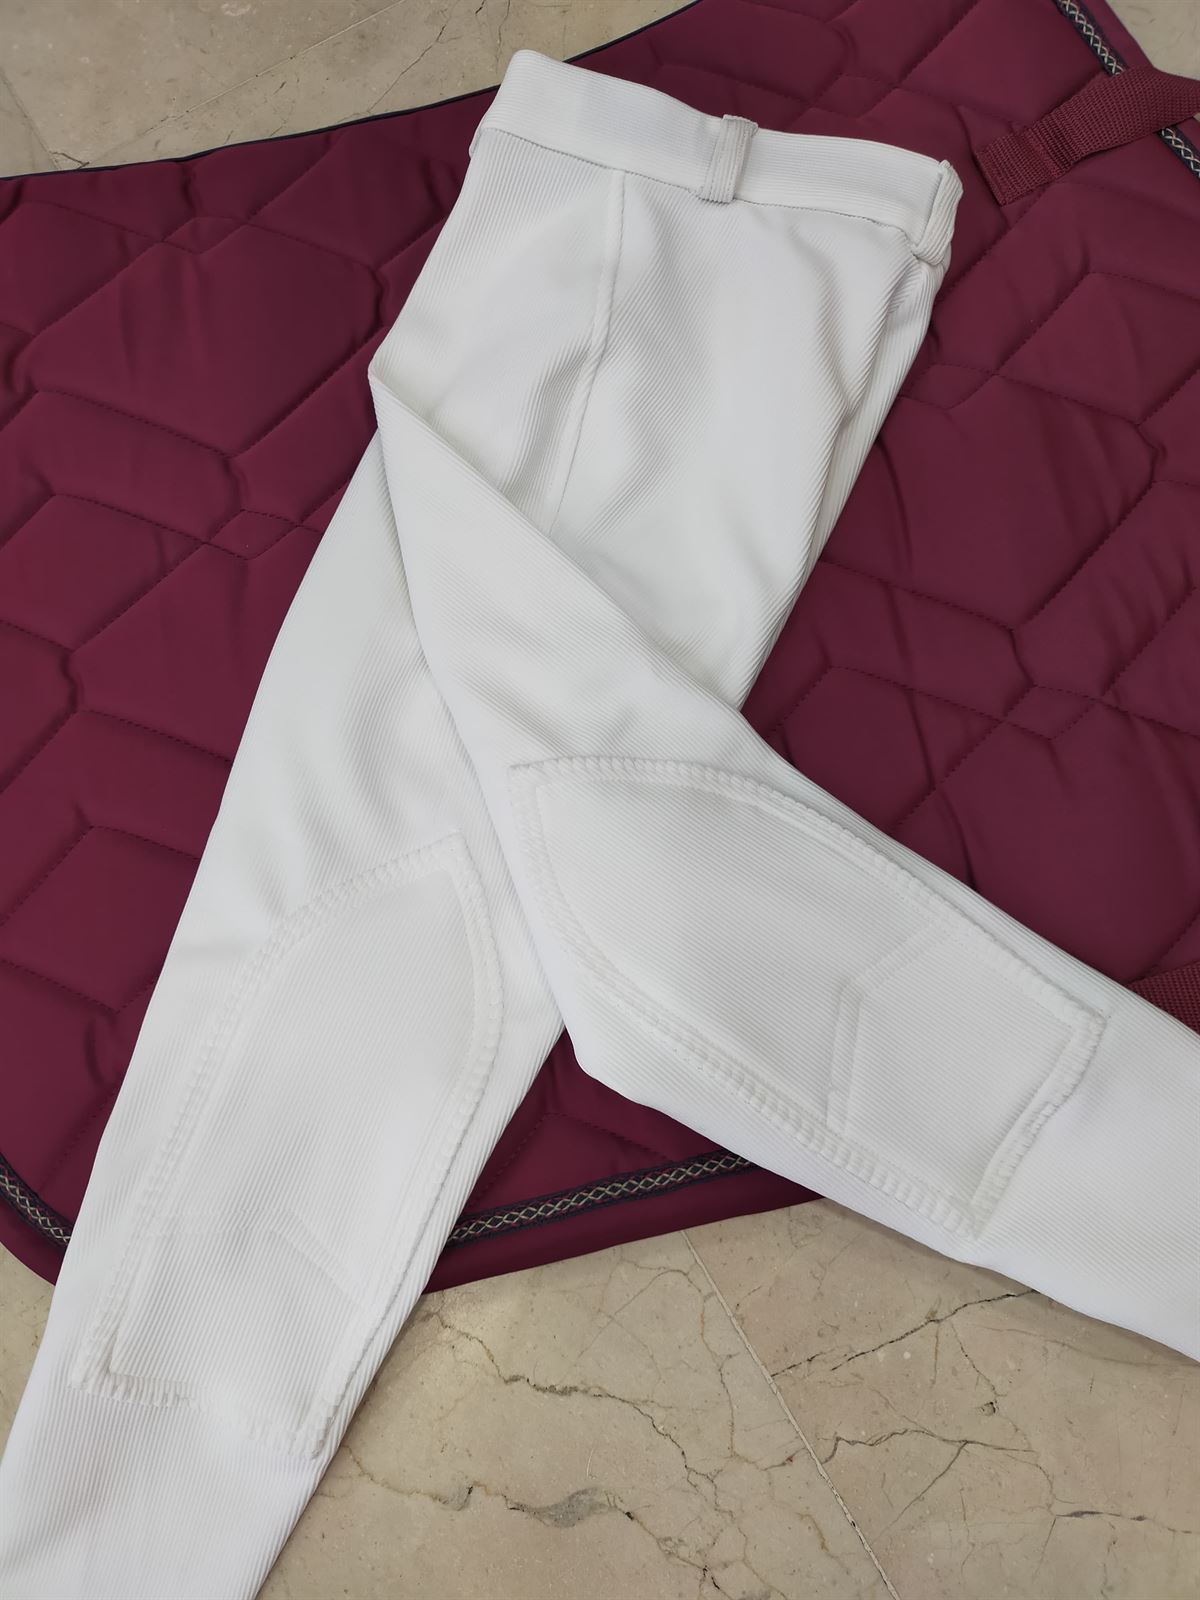 Pantalón unisex TUFF RIDER Country color blanco TALLA 10 (tallaje infantil) - Imagen 4